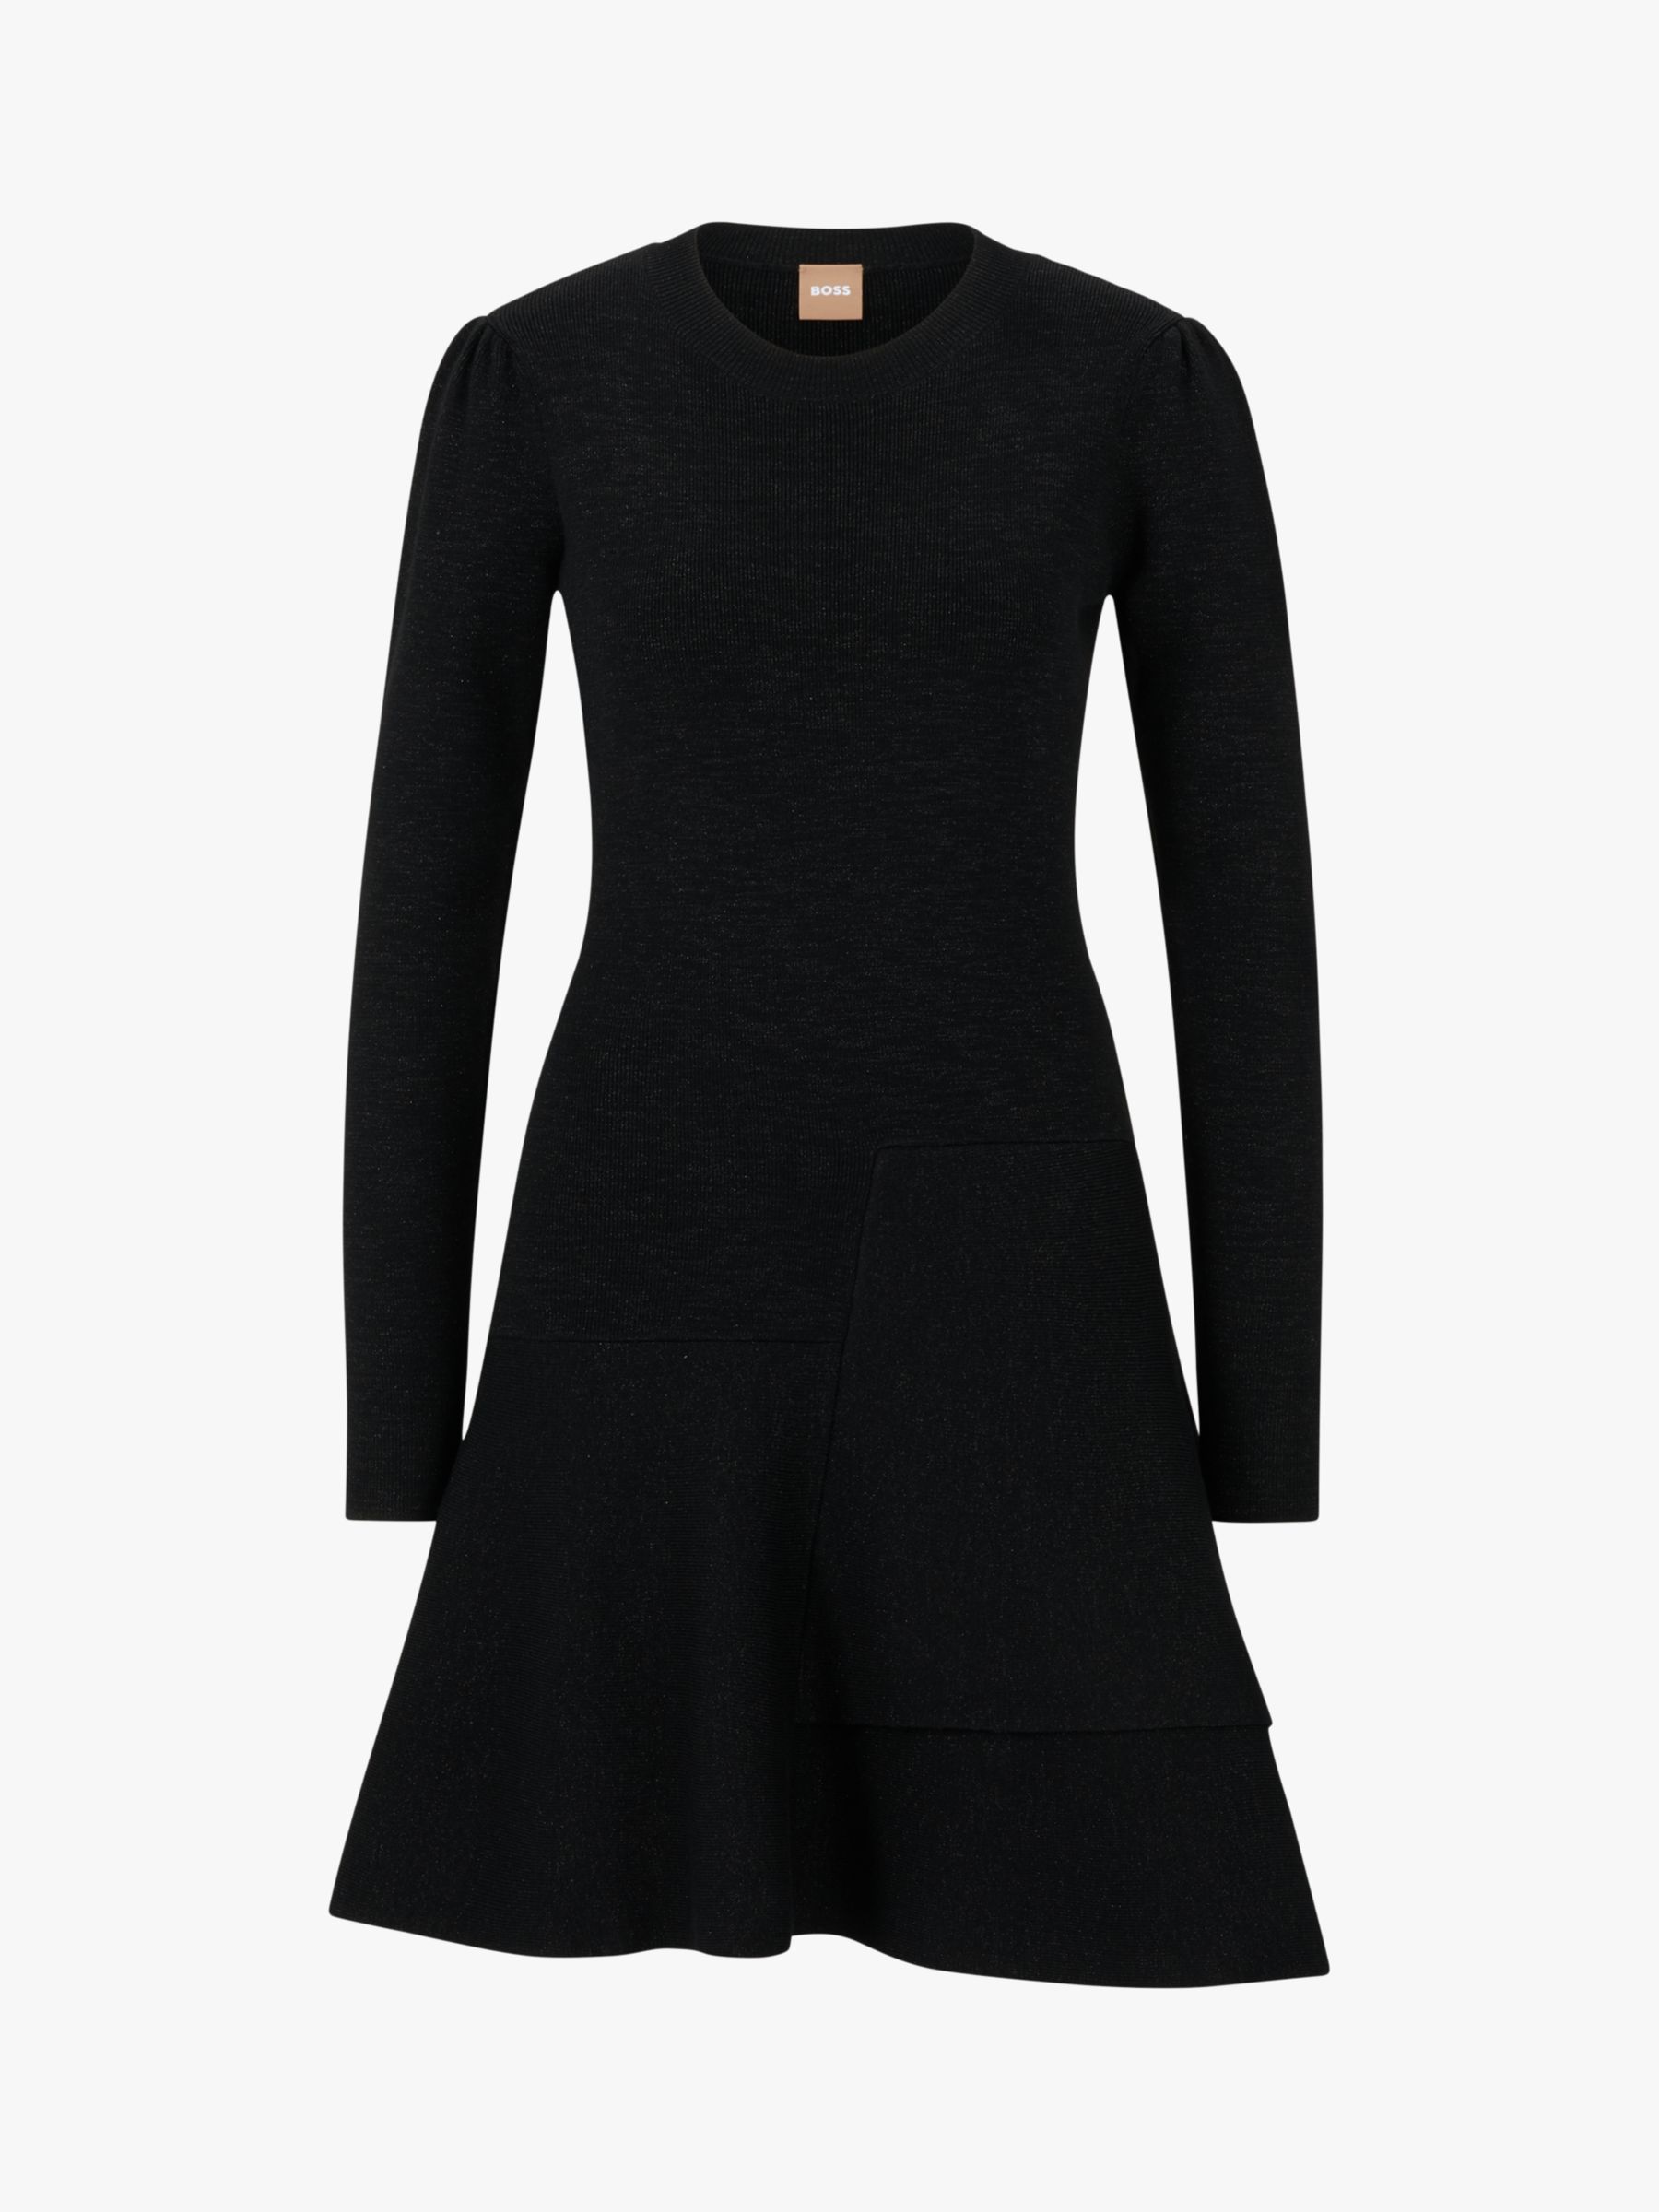 HUGO BOSS Faribella Wool Blend Sparkle Dress, Black